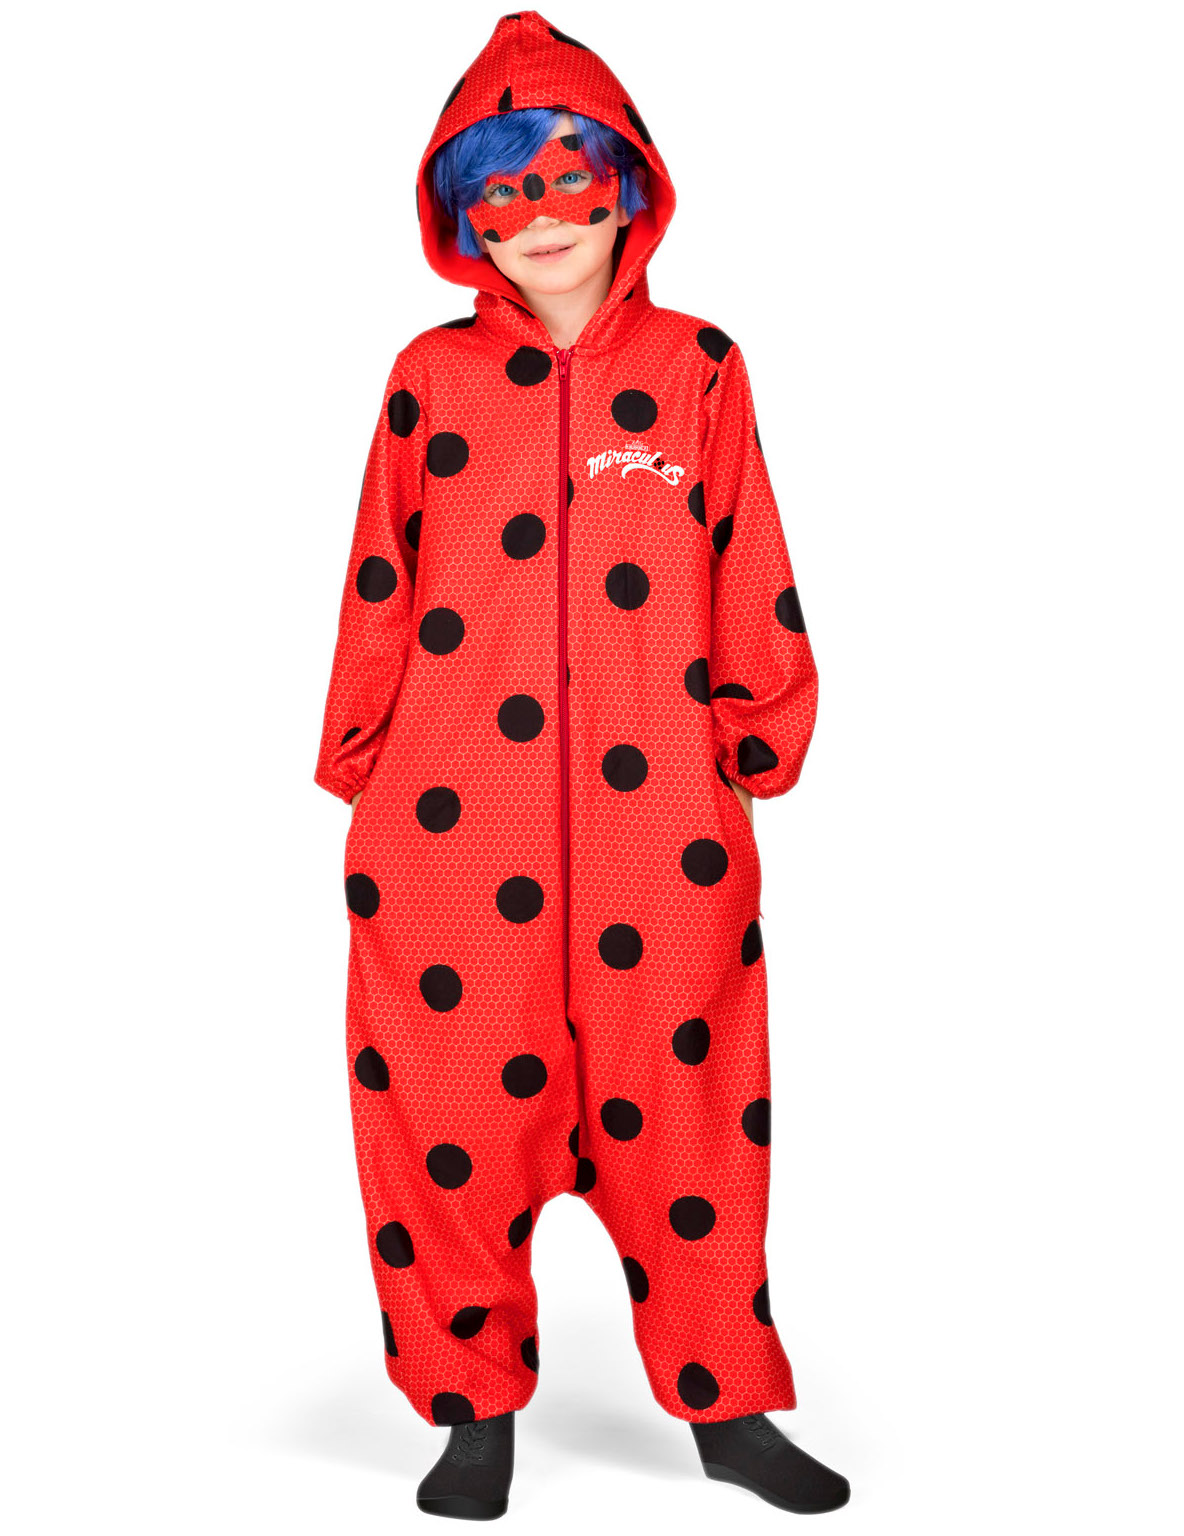 Ladybug-Overall Kinderkostüm rot-schwarz von VIVING COSTUMES / JUINSA